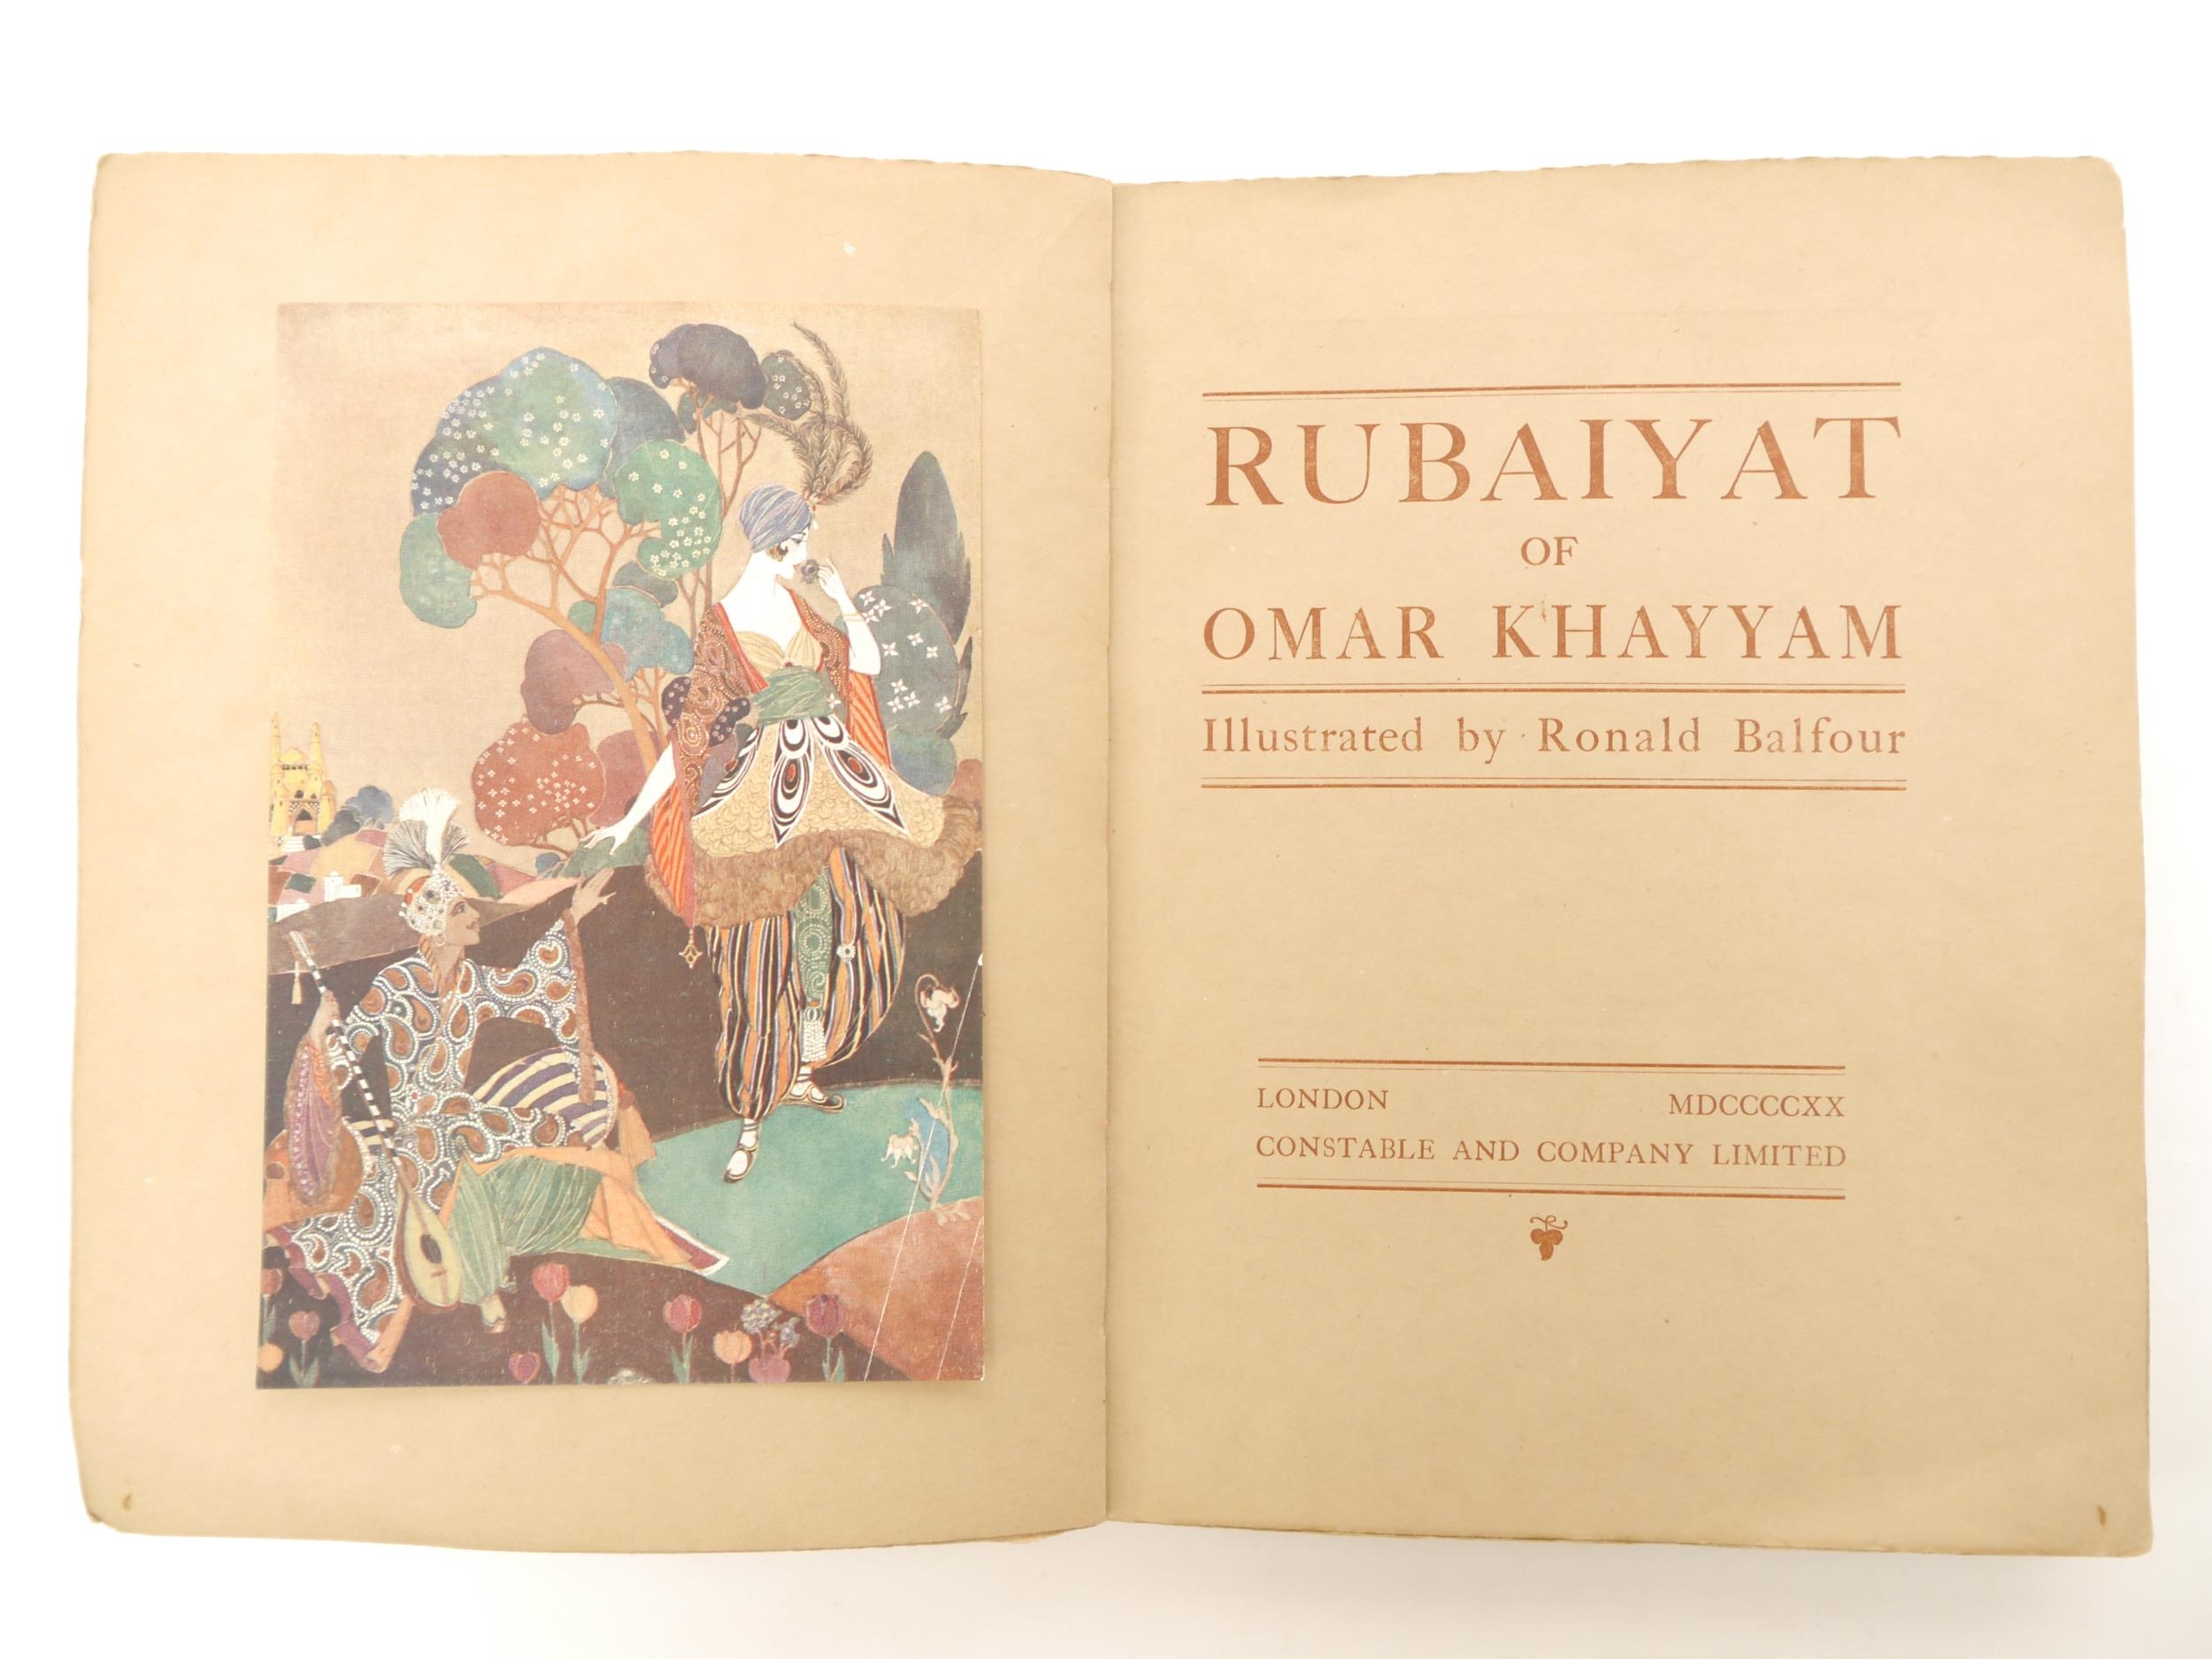 Ronald Balfour (ill.): 'Rubaiyat of Omar Khayyam', London, Constable & Company, 1920, 1st Balfour